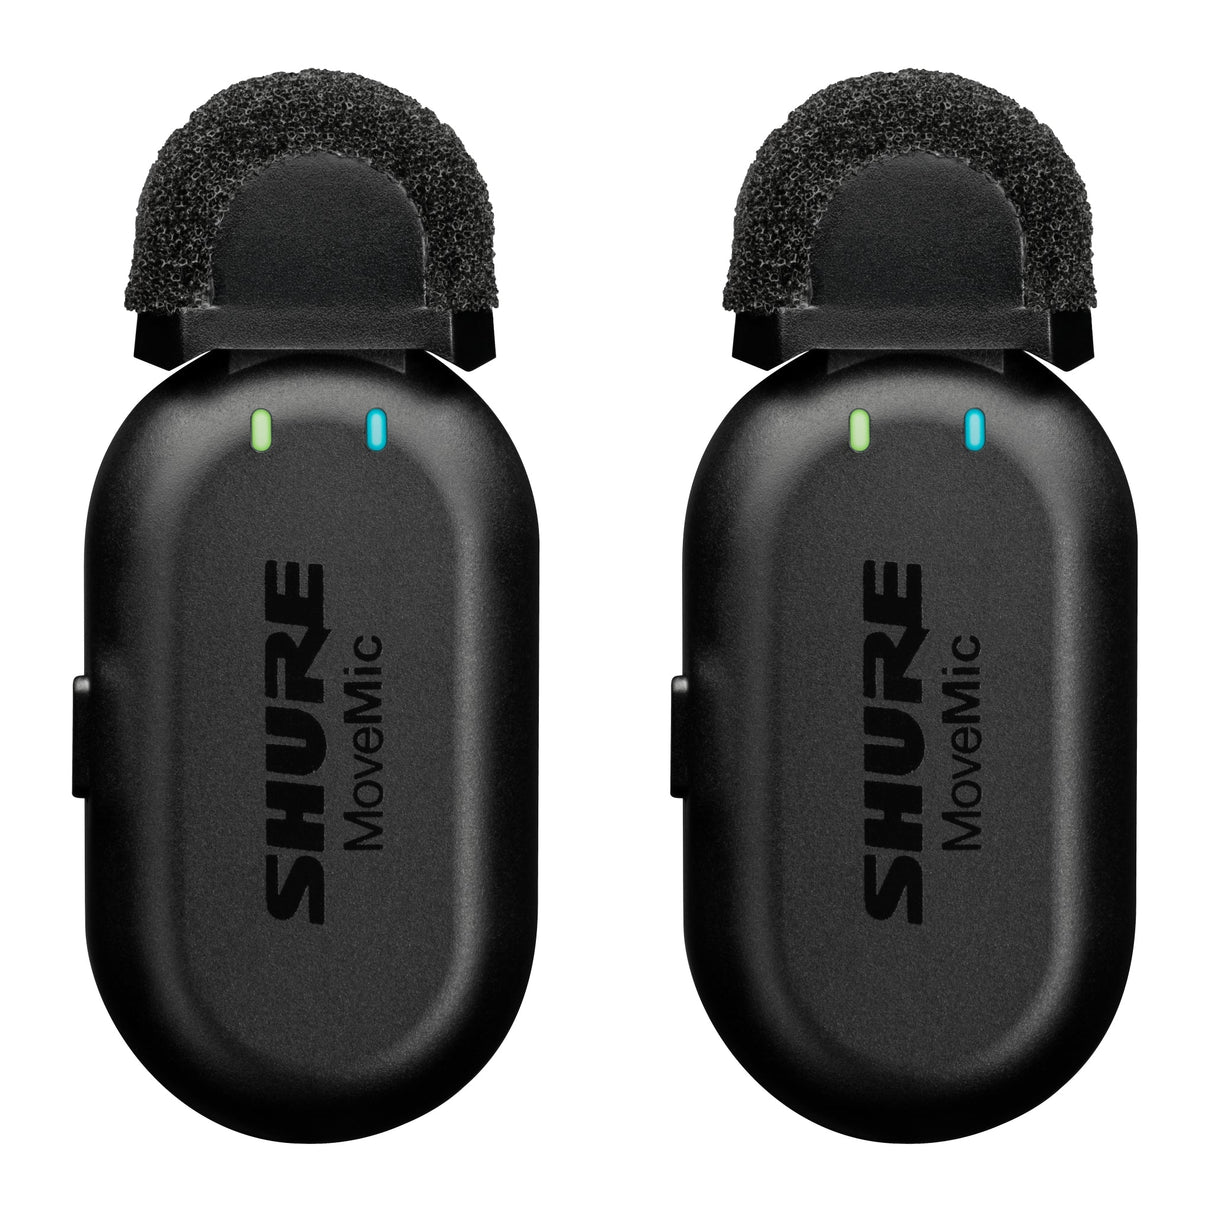 Shure MoveMic Two 2-Channel Wireless Lavalier Microphone, Z7